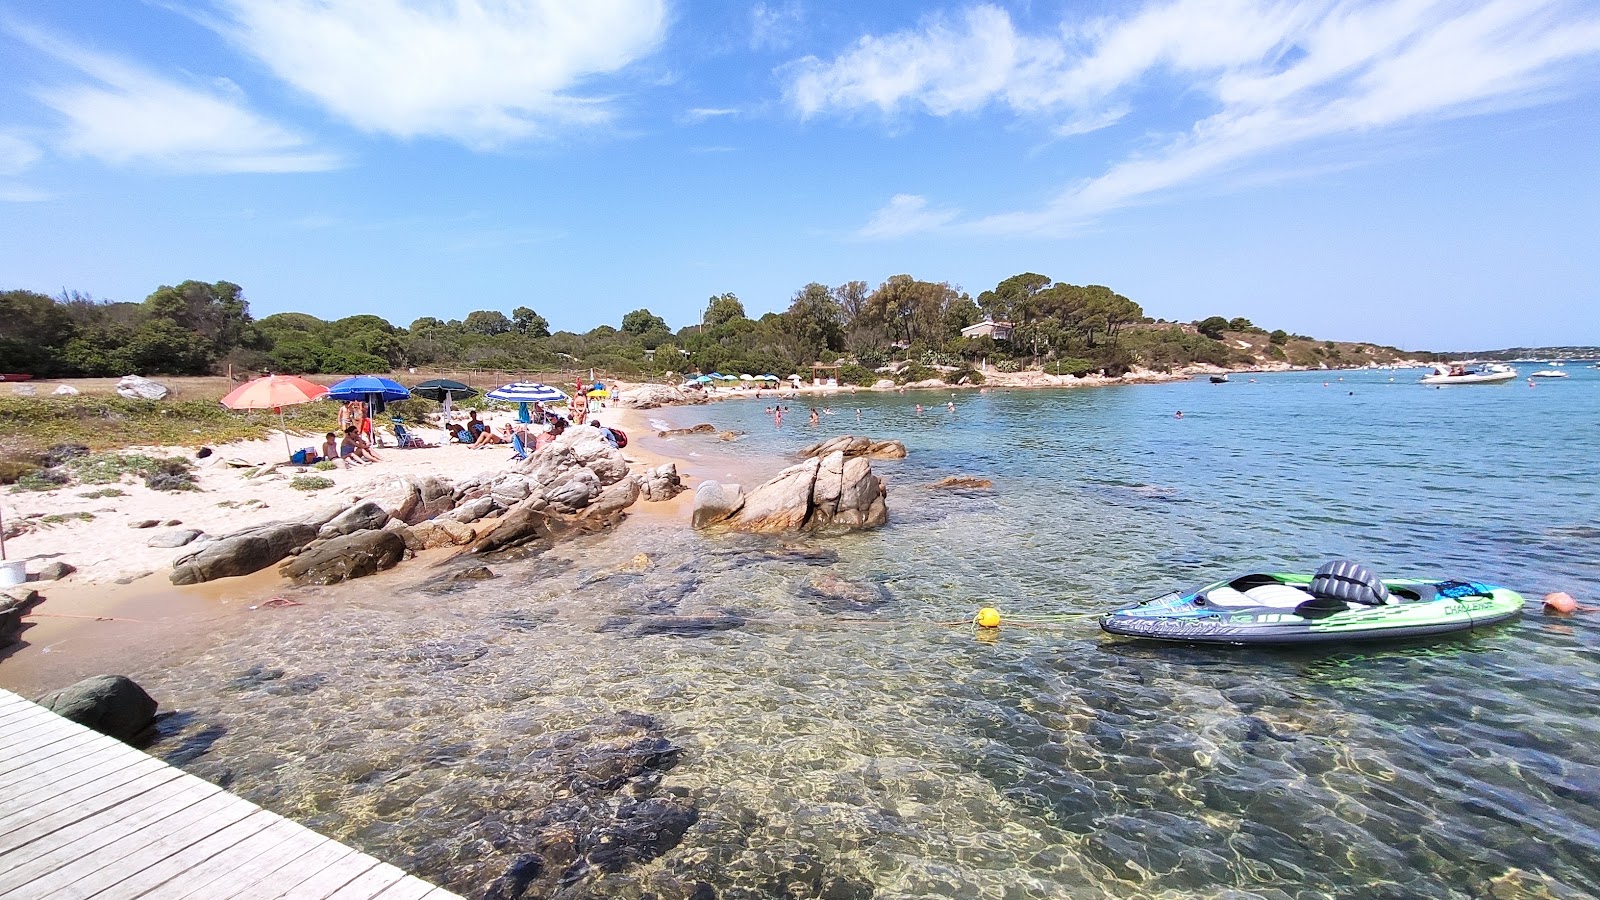 Foto von Spiaggia Angolo Azzurro mit türkisfarbenes wasser Oberfläche